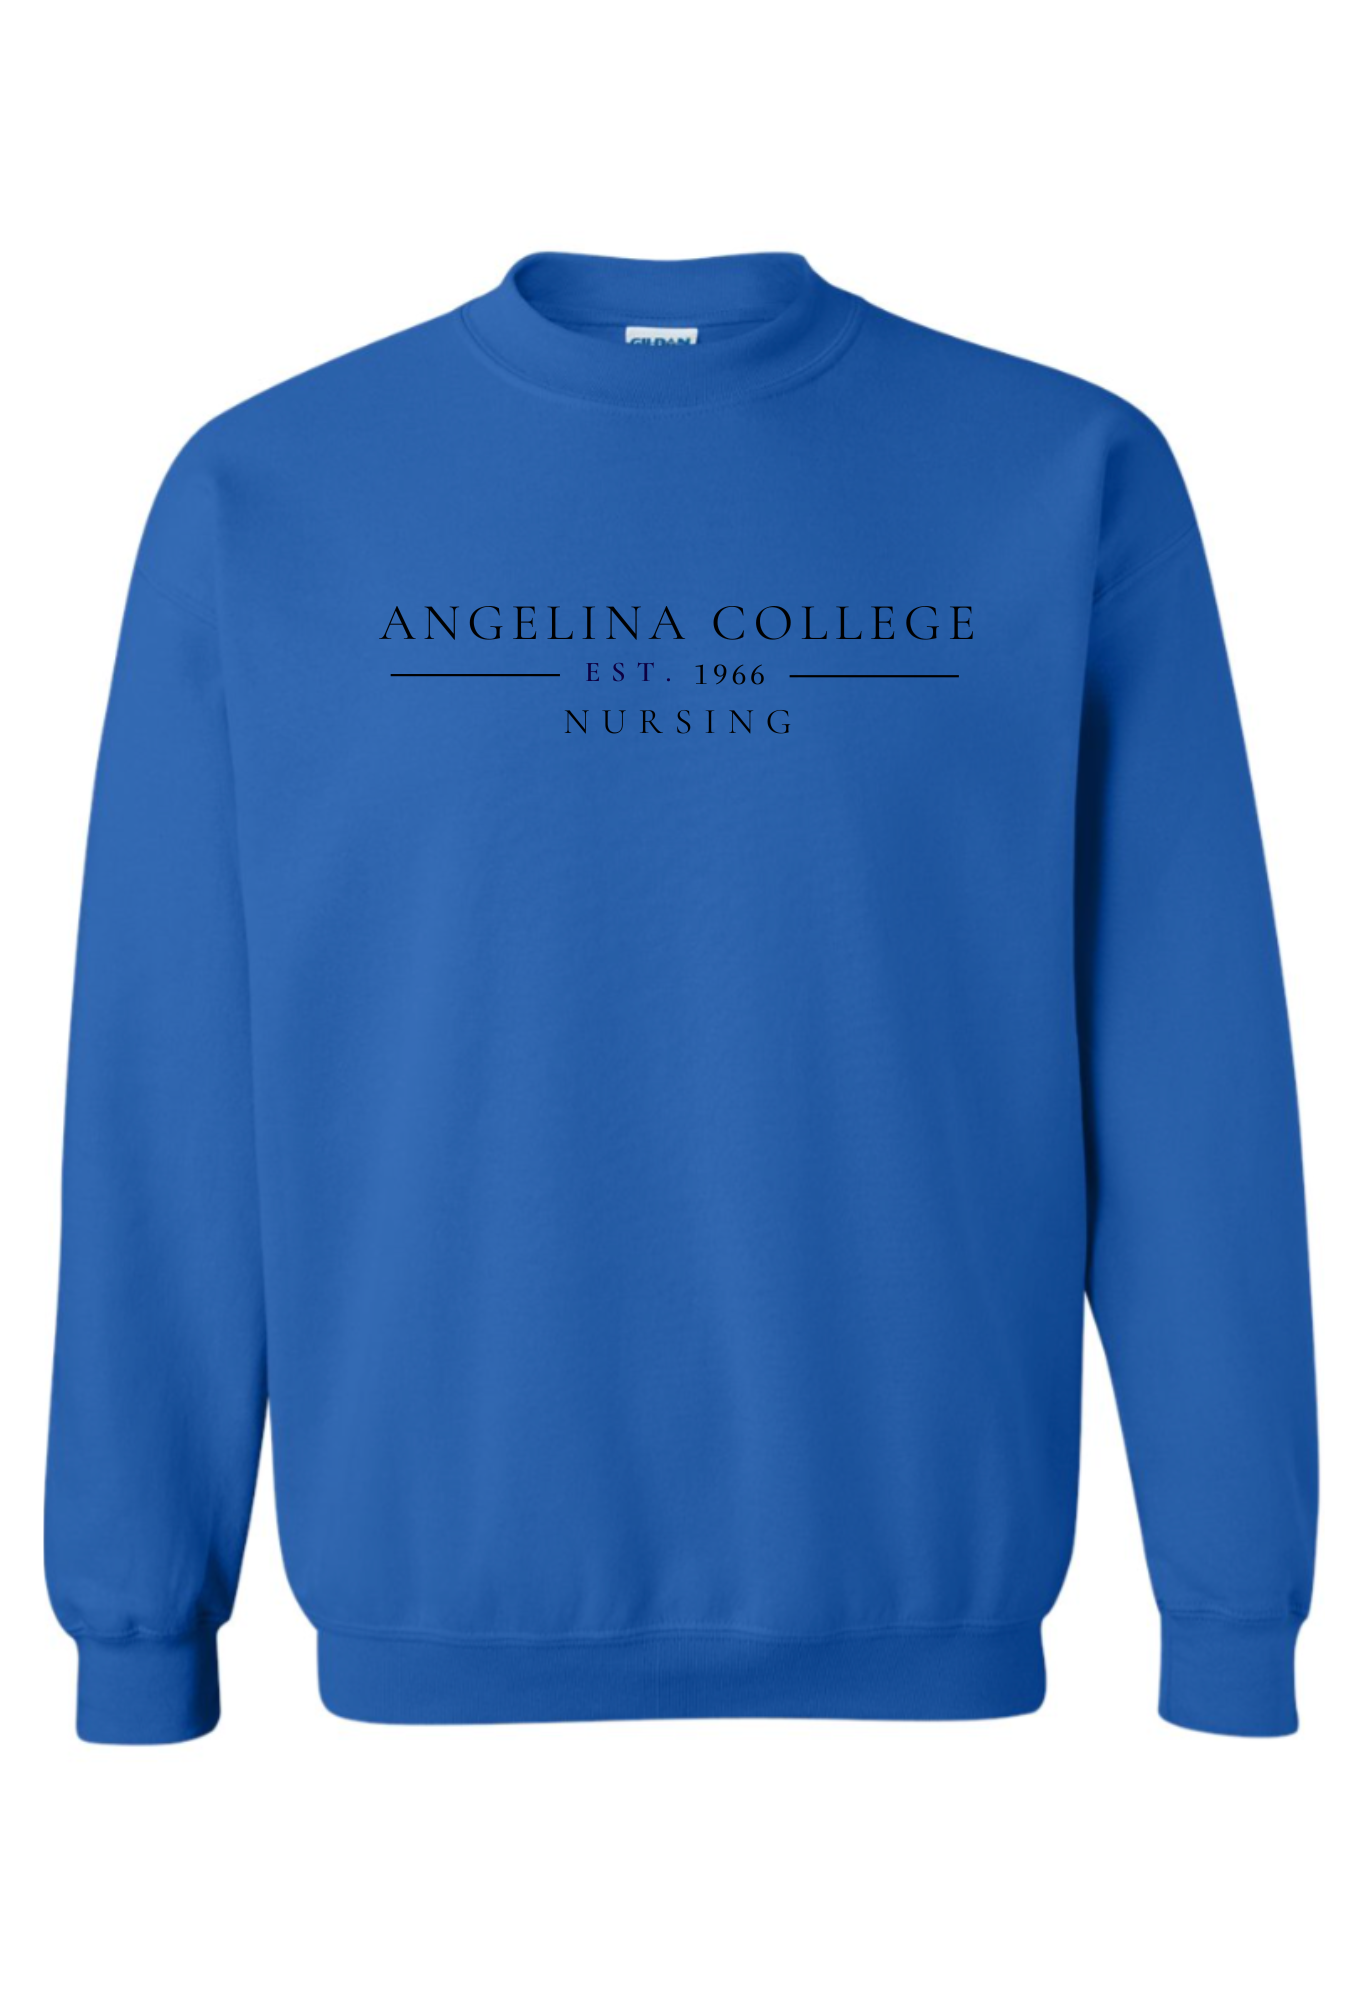 Angelina College Nursing Sweatshirt